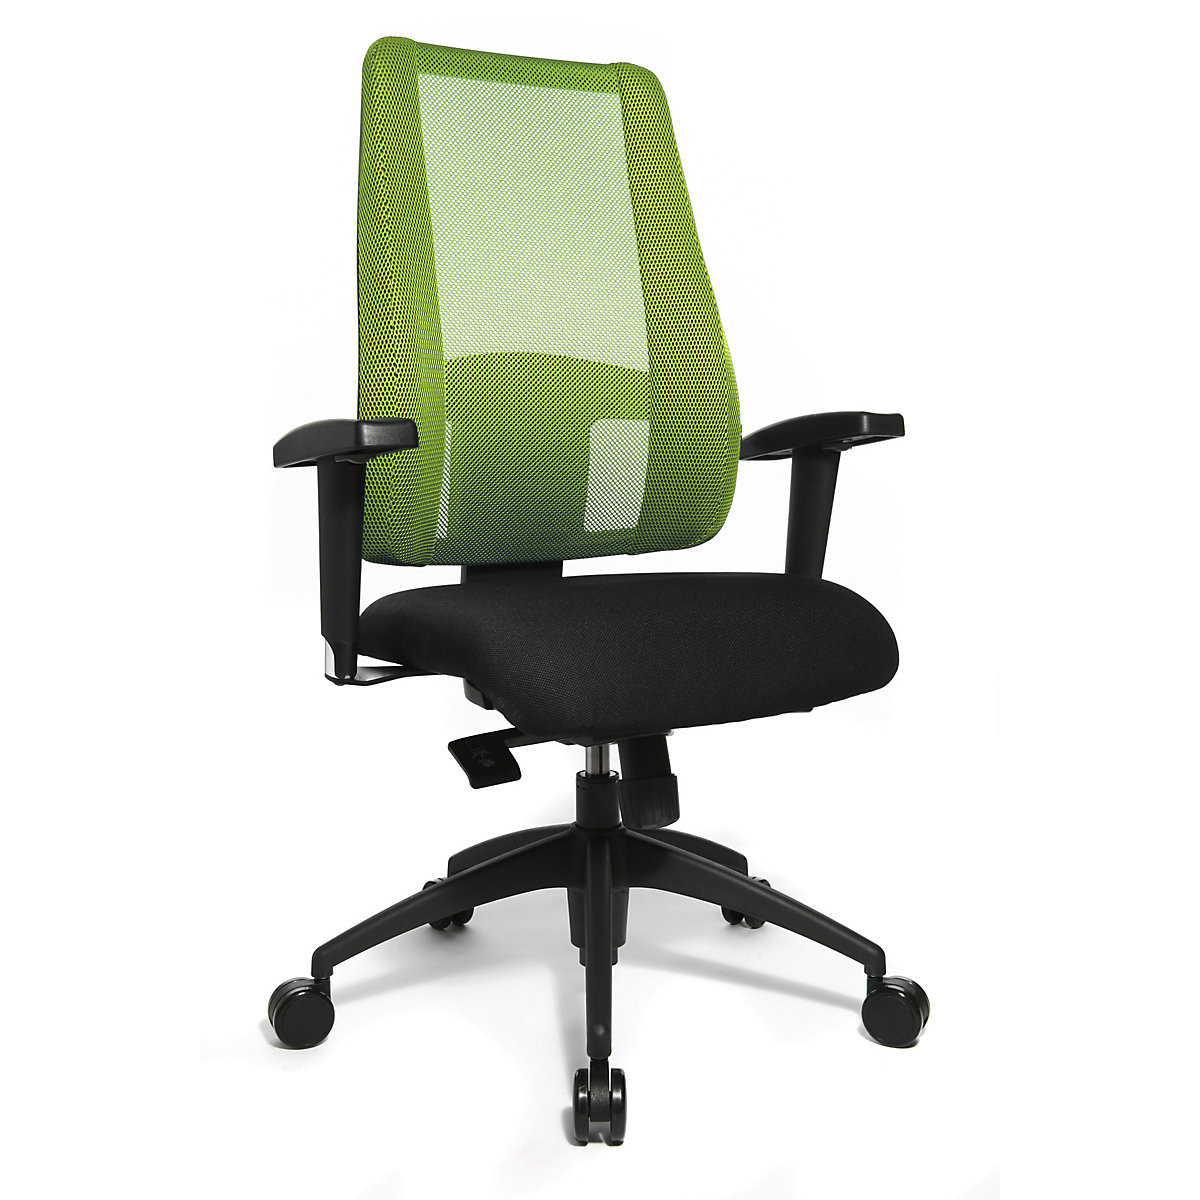 Okretna uredska stolica LADY SITNESS DELUXE – Topstar, pomična izvedba sa 7 zona, u crnoj / zelenoj boji-11